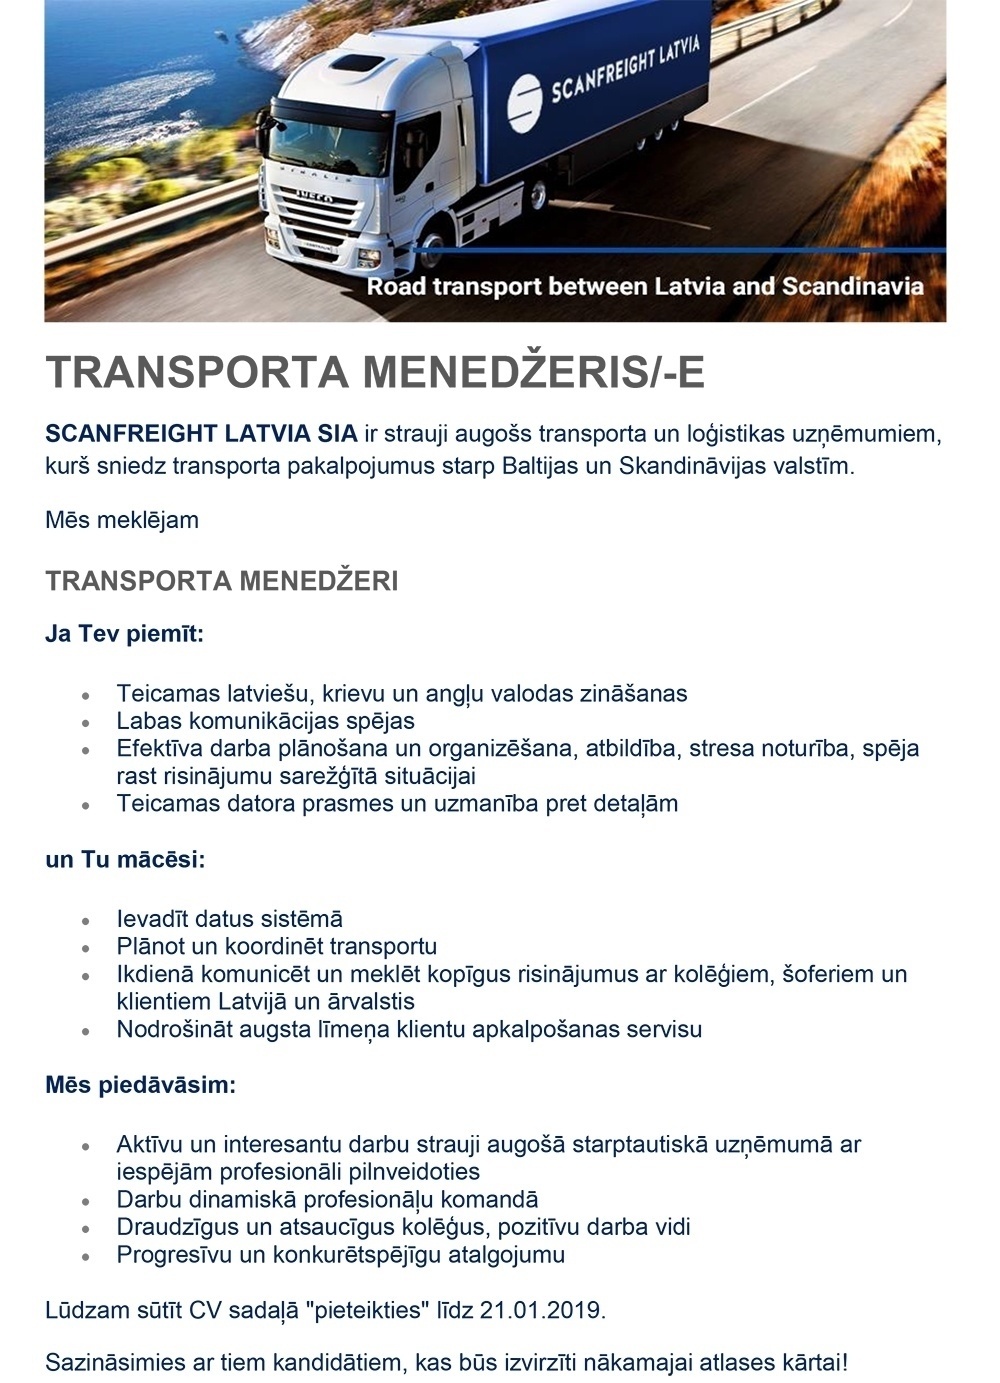 SCANFREIGHT LATVIA, SIA Transporta menedžeris/-e